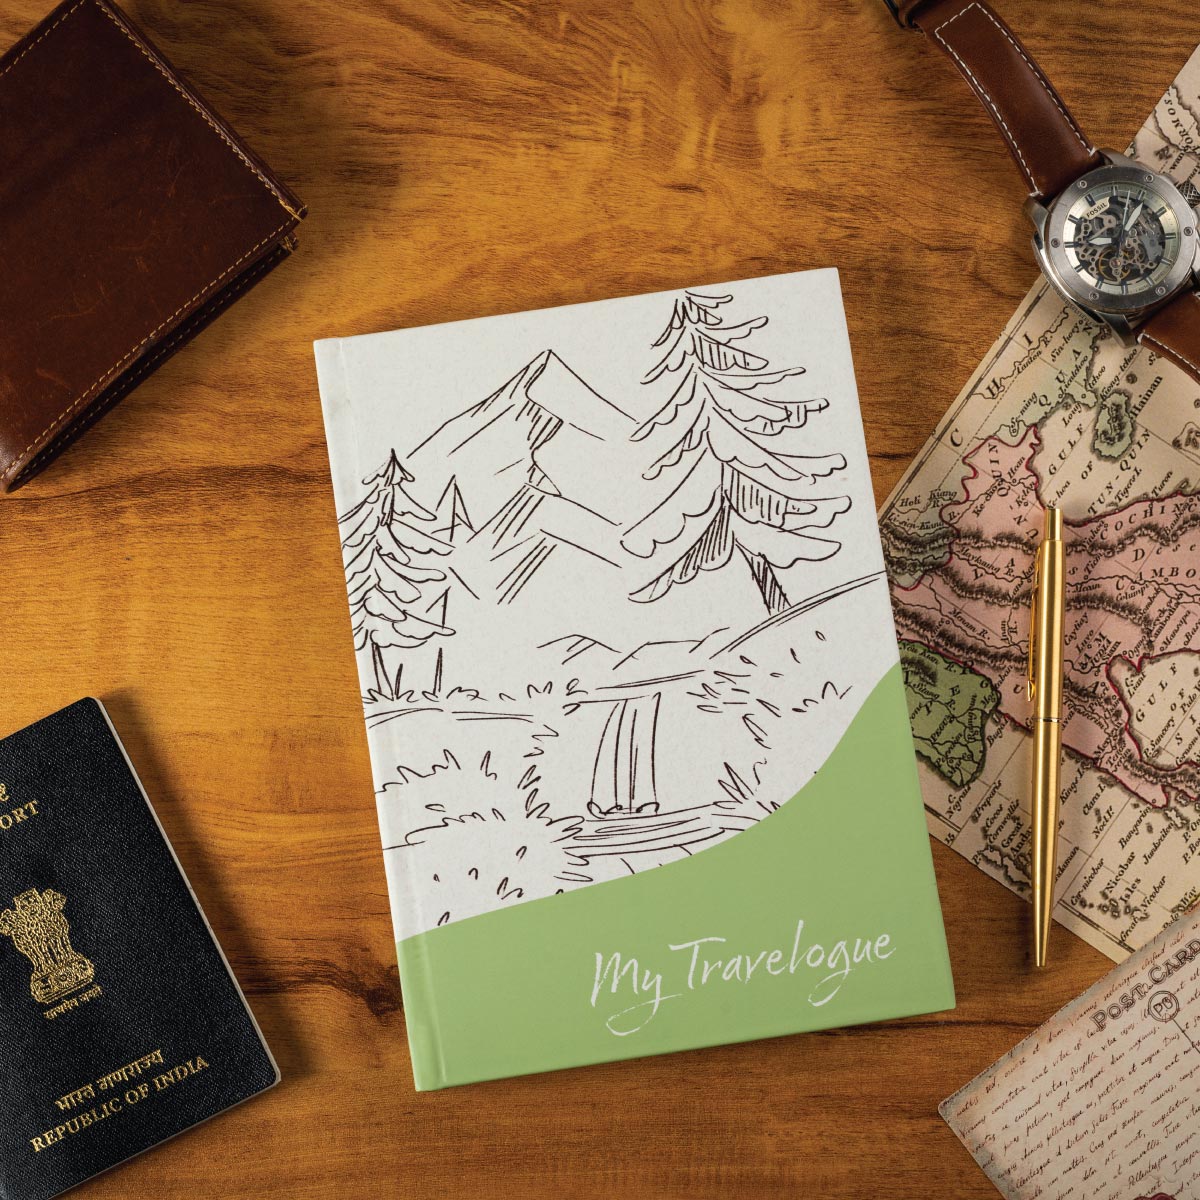 My Travelogue Travel Journal